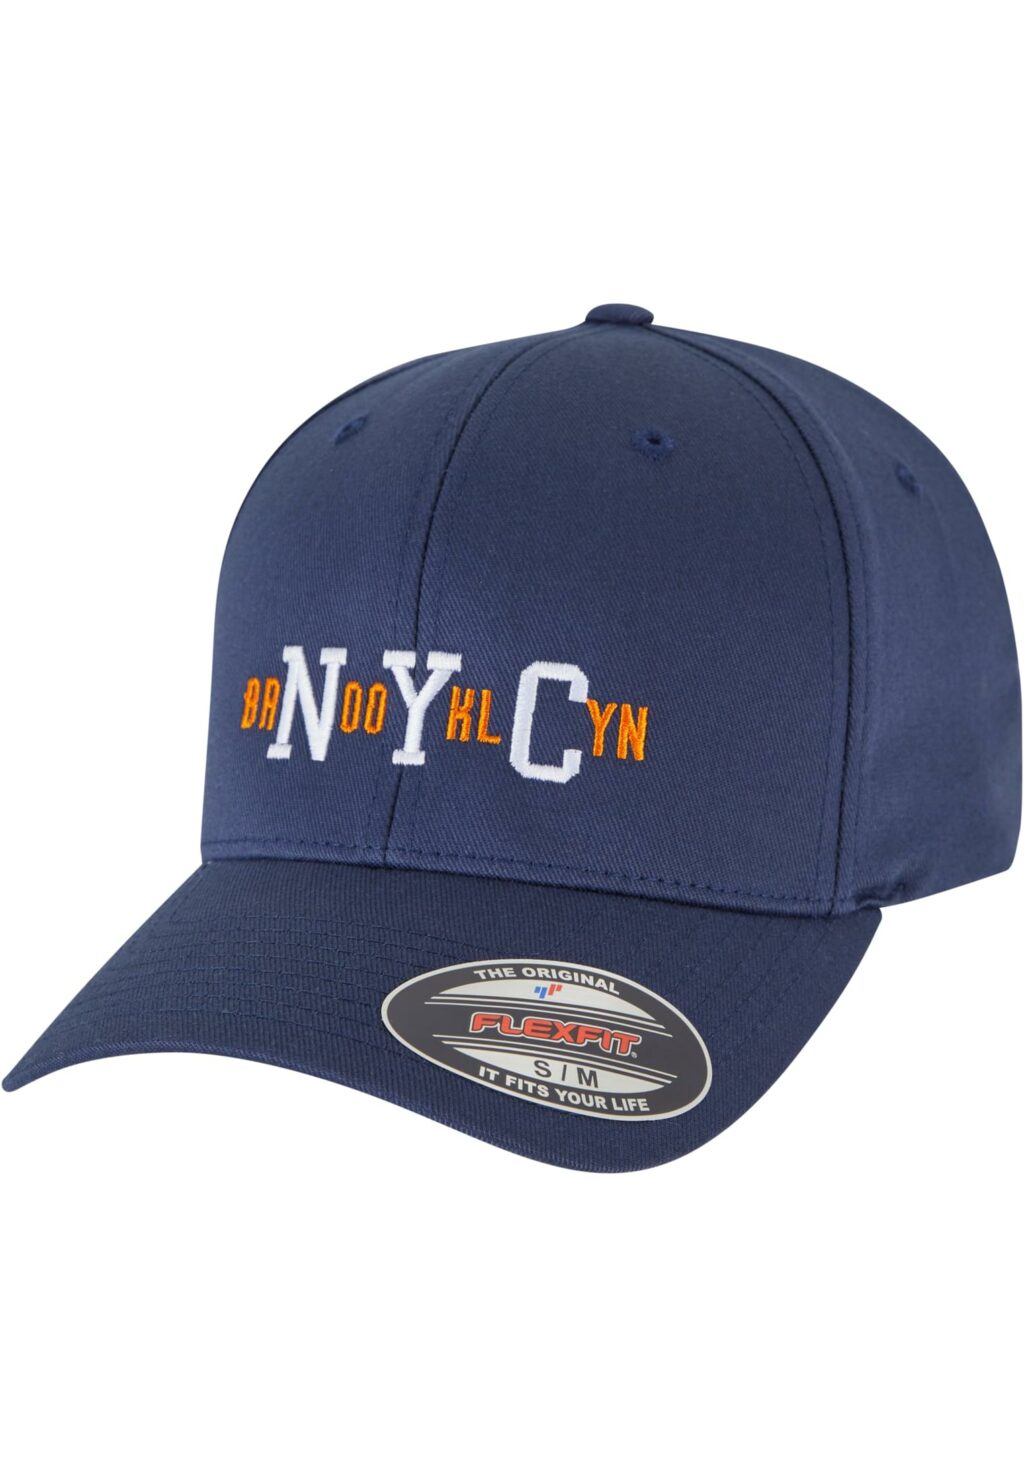 NYC Brooklyn Flexfit Cap navy MT2849